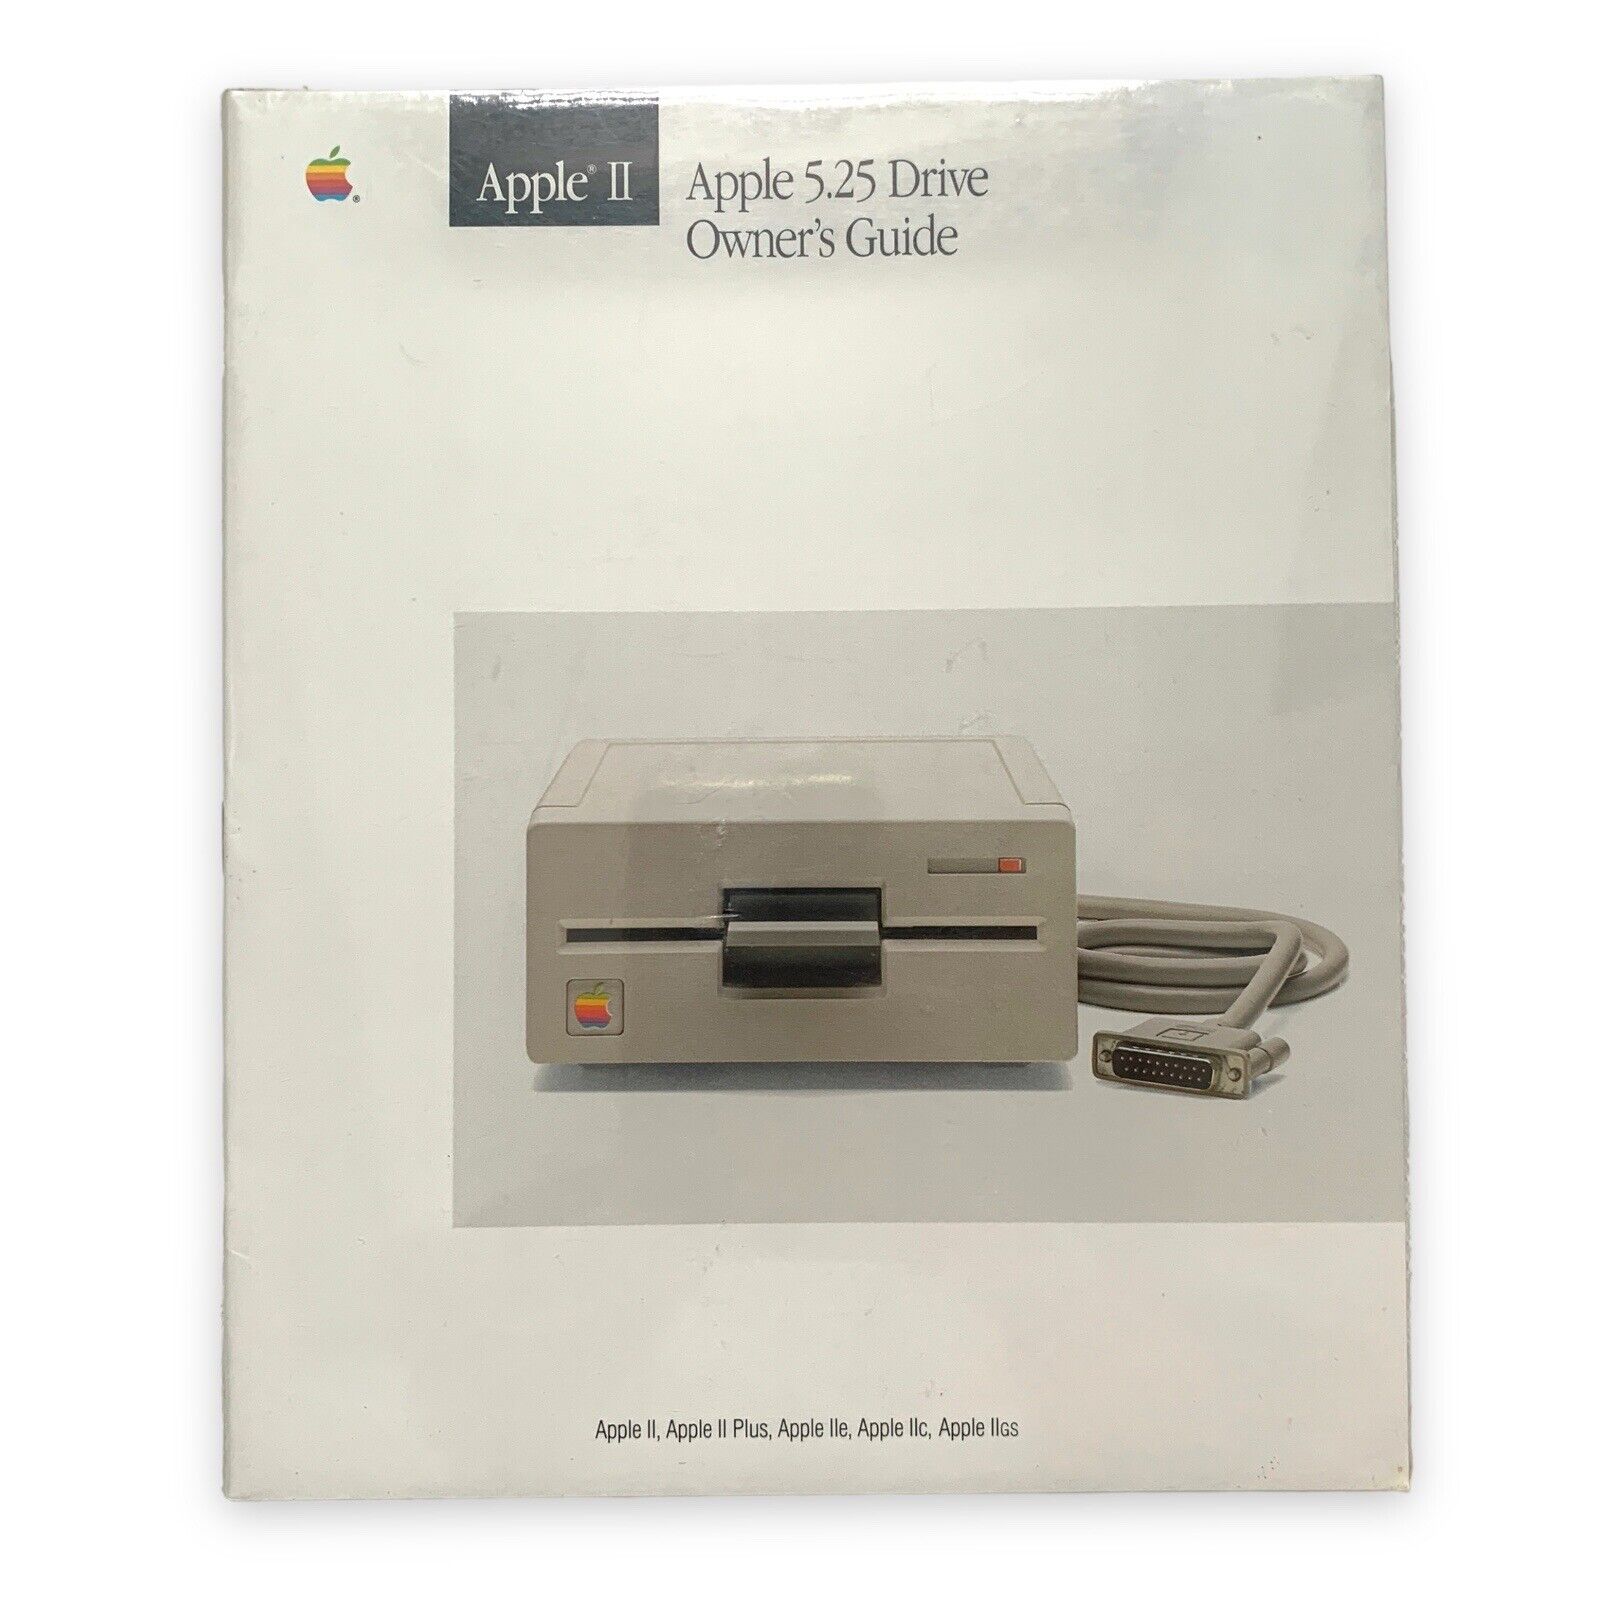 Apple II Apple 5.25 Drive Owner’s Guide VTG 1986 SEALED